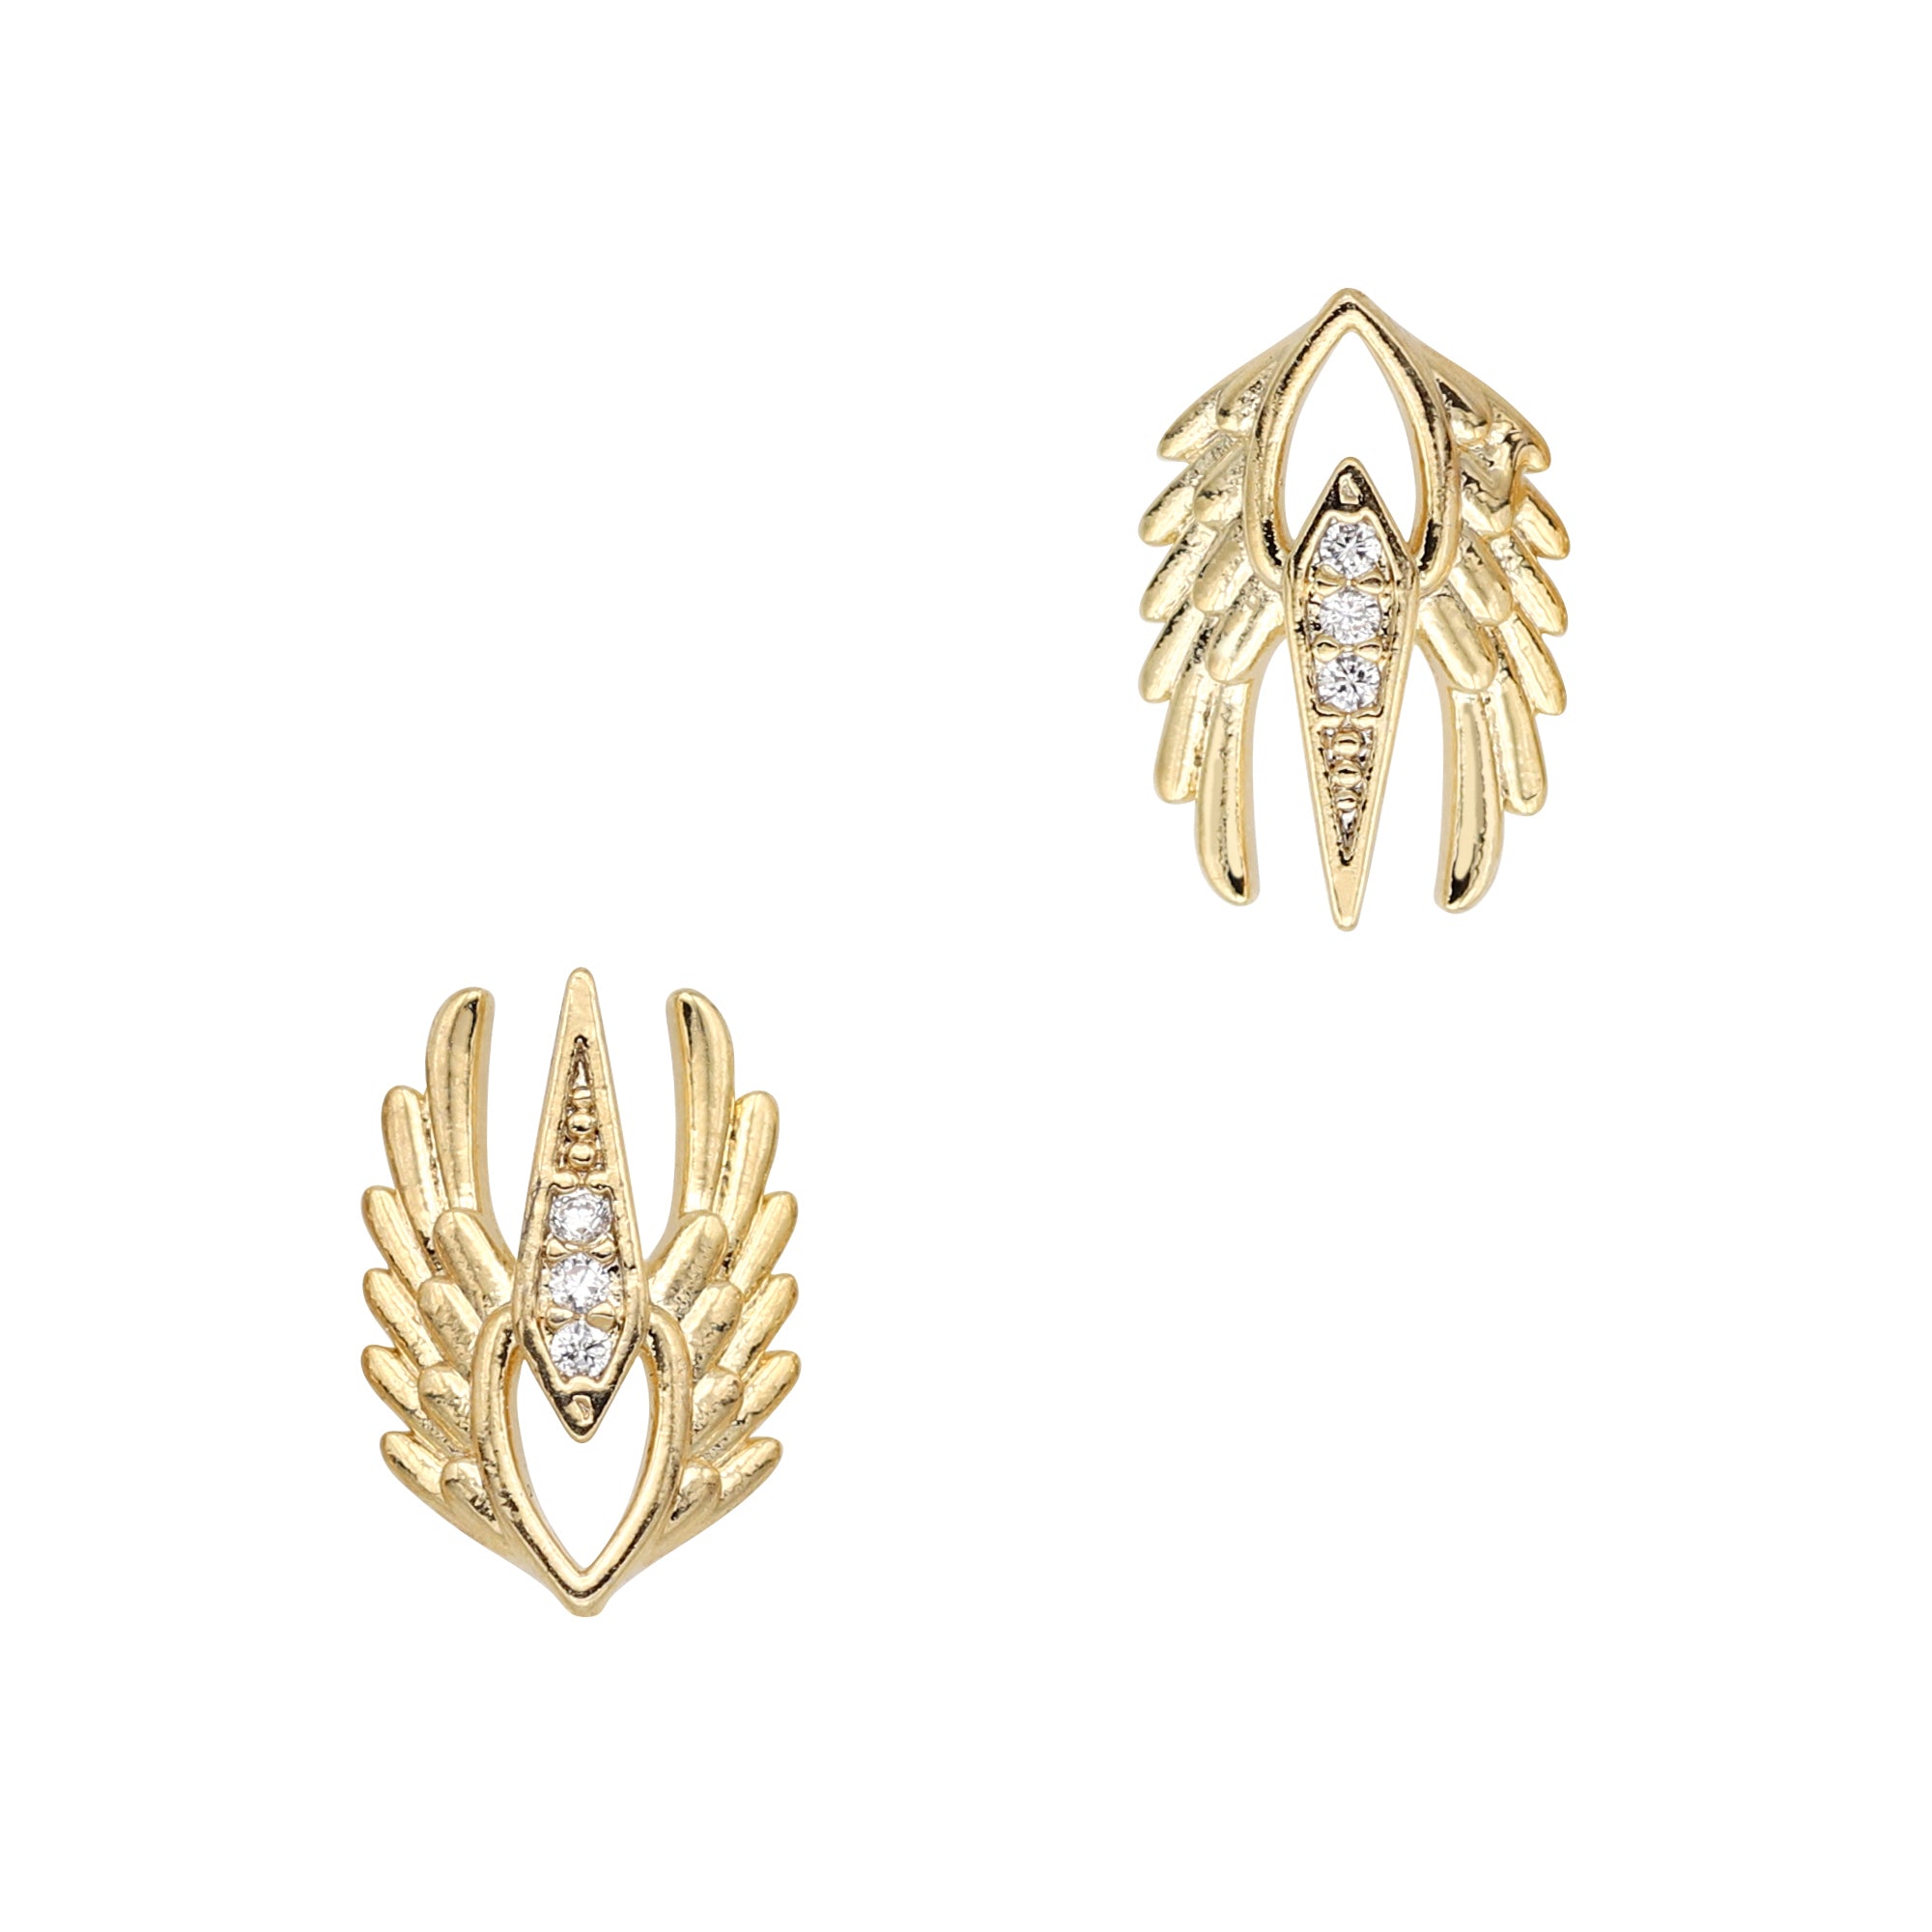 Winged Sigil / Zircon Charm / Gold Nail Art Jewelry Quality Metal Parts Decor